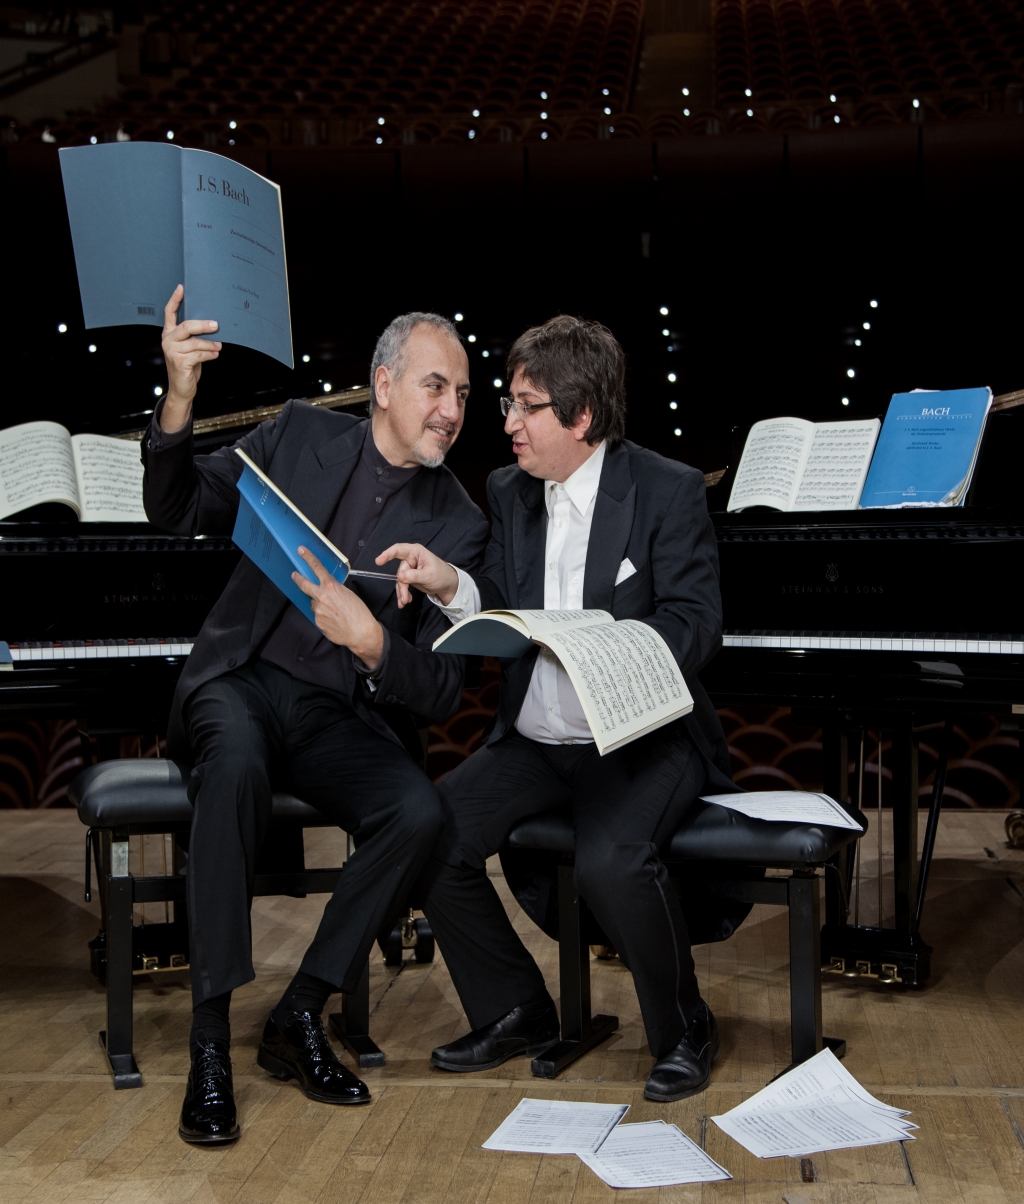 Busca - Ramin Bahrami & Danilo Rea in “Bach is in the air”